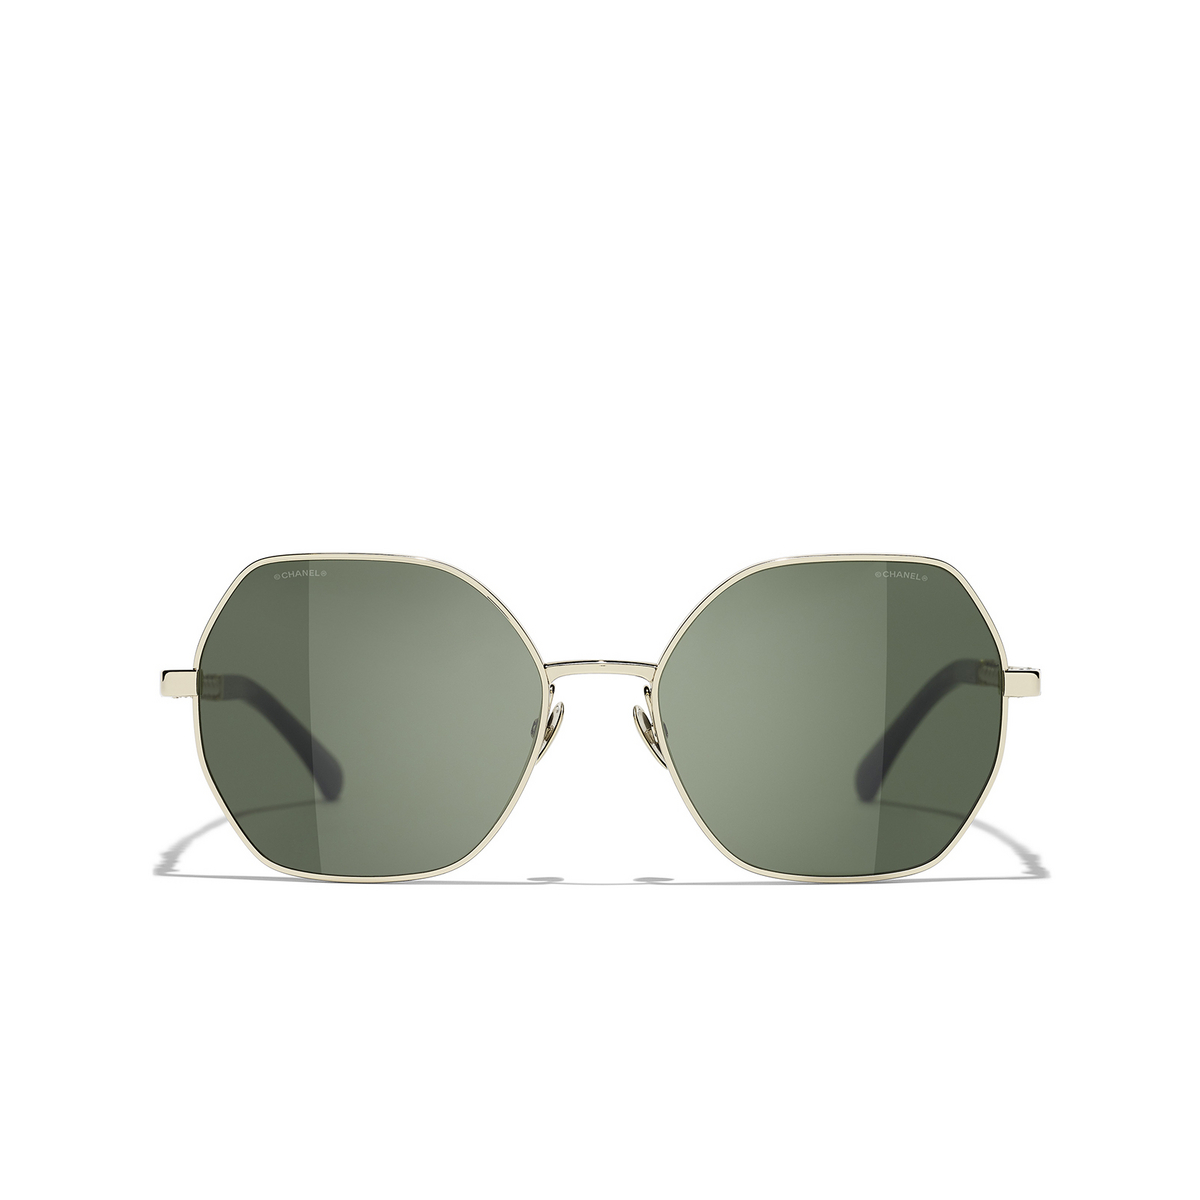 CHANEL square Sunglasses C46831 Gold & Dark Green - front view